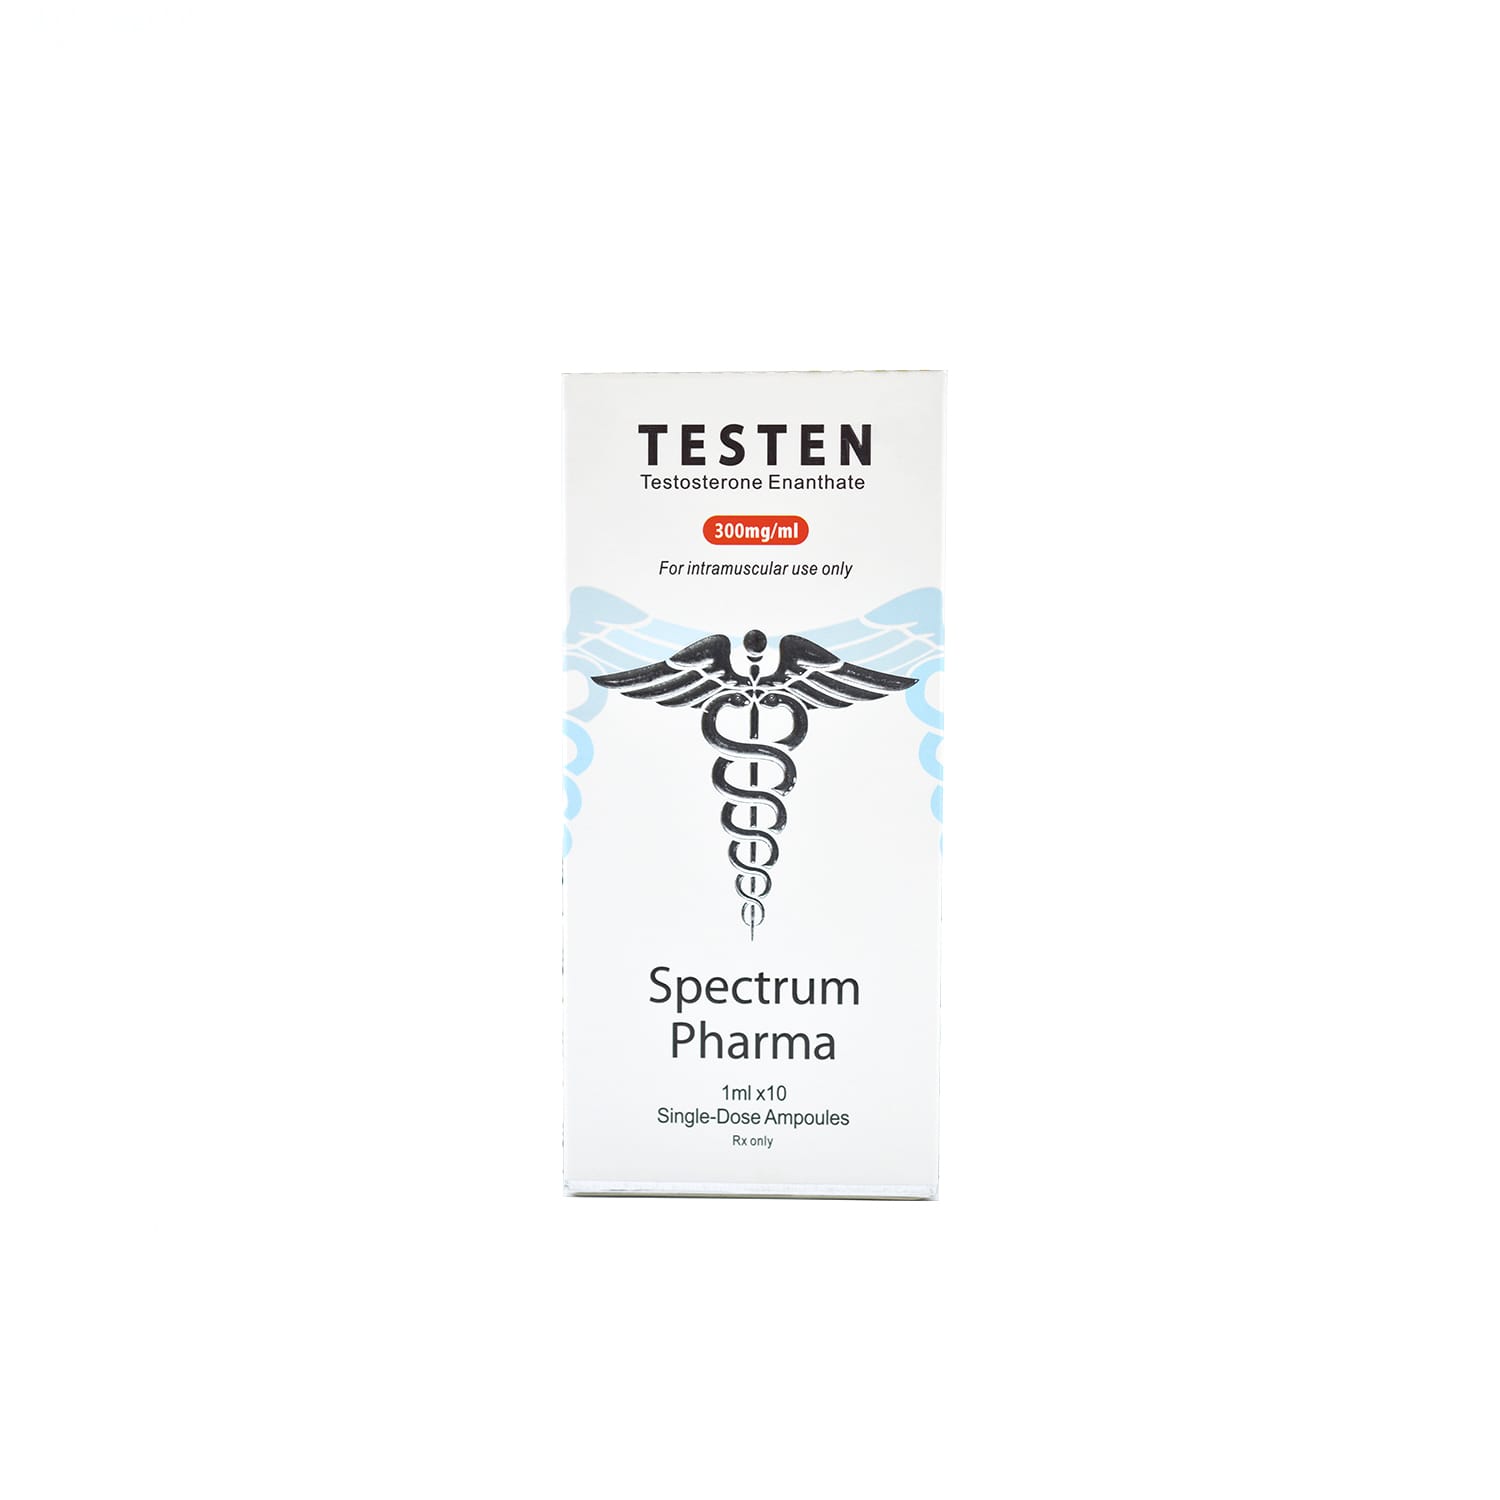 TESTEN Spectrum Pharma